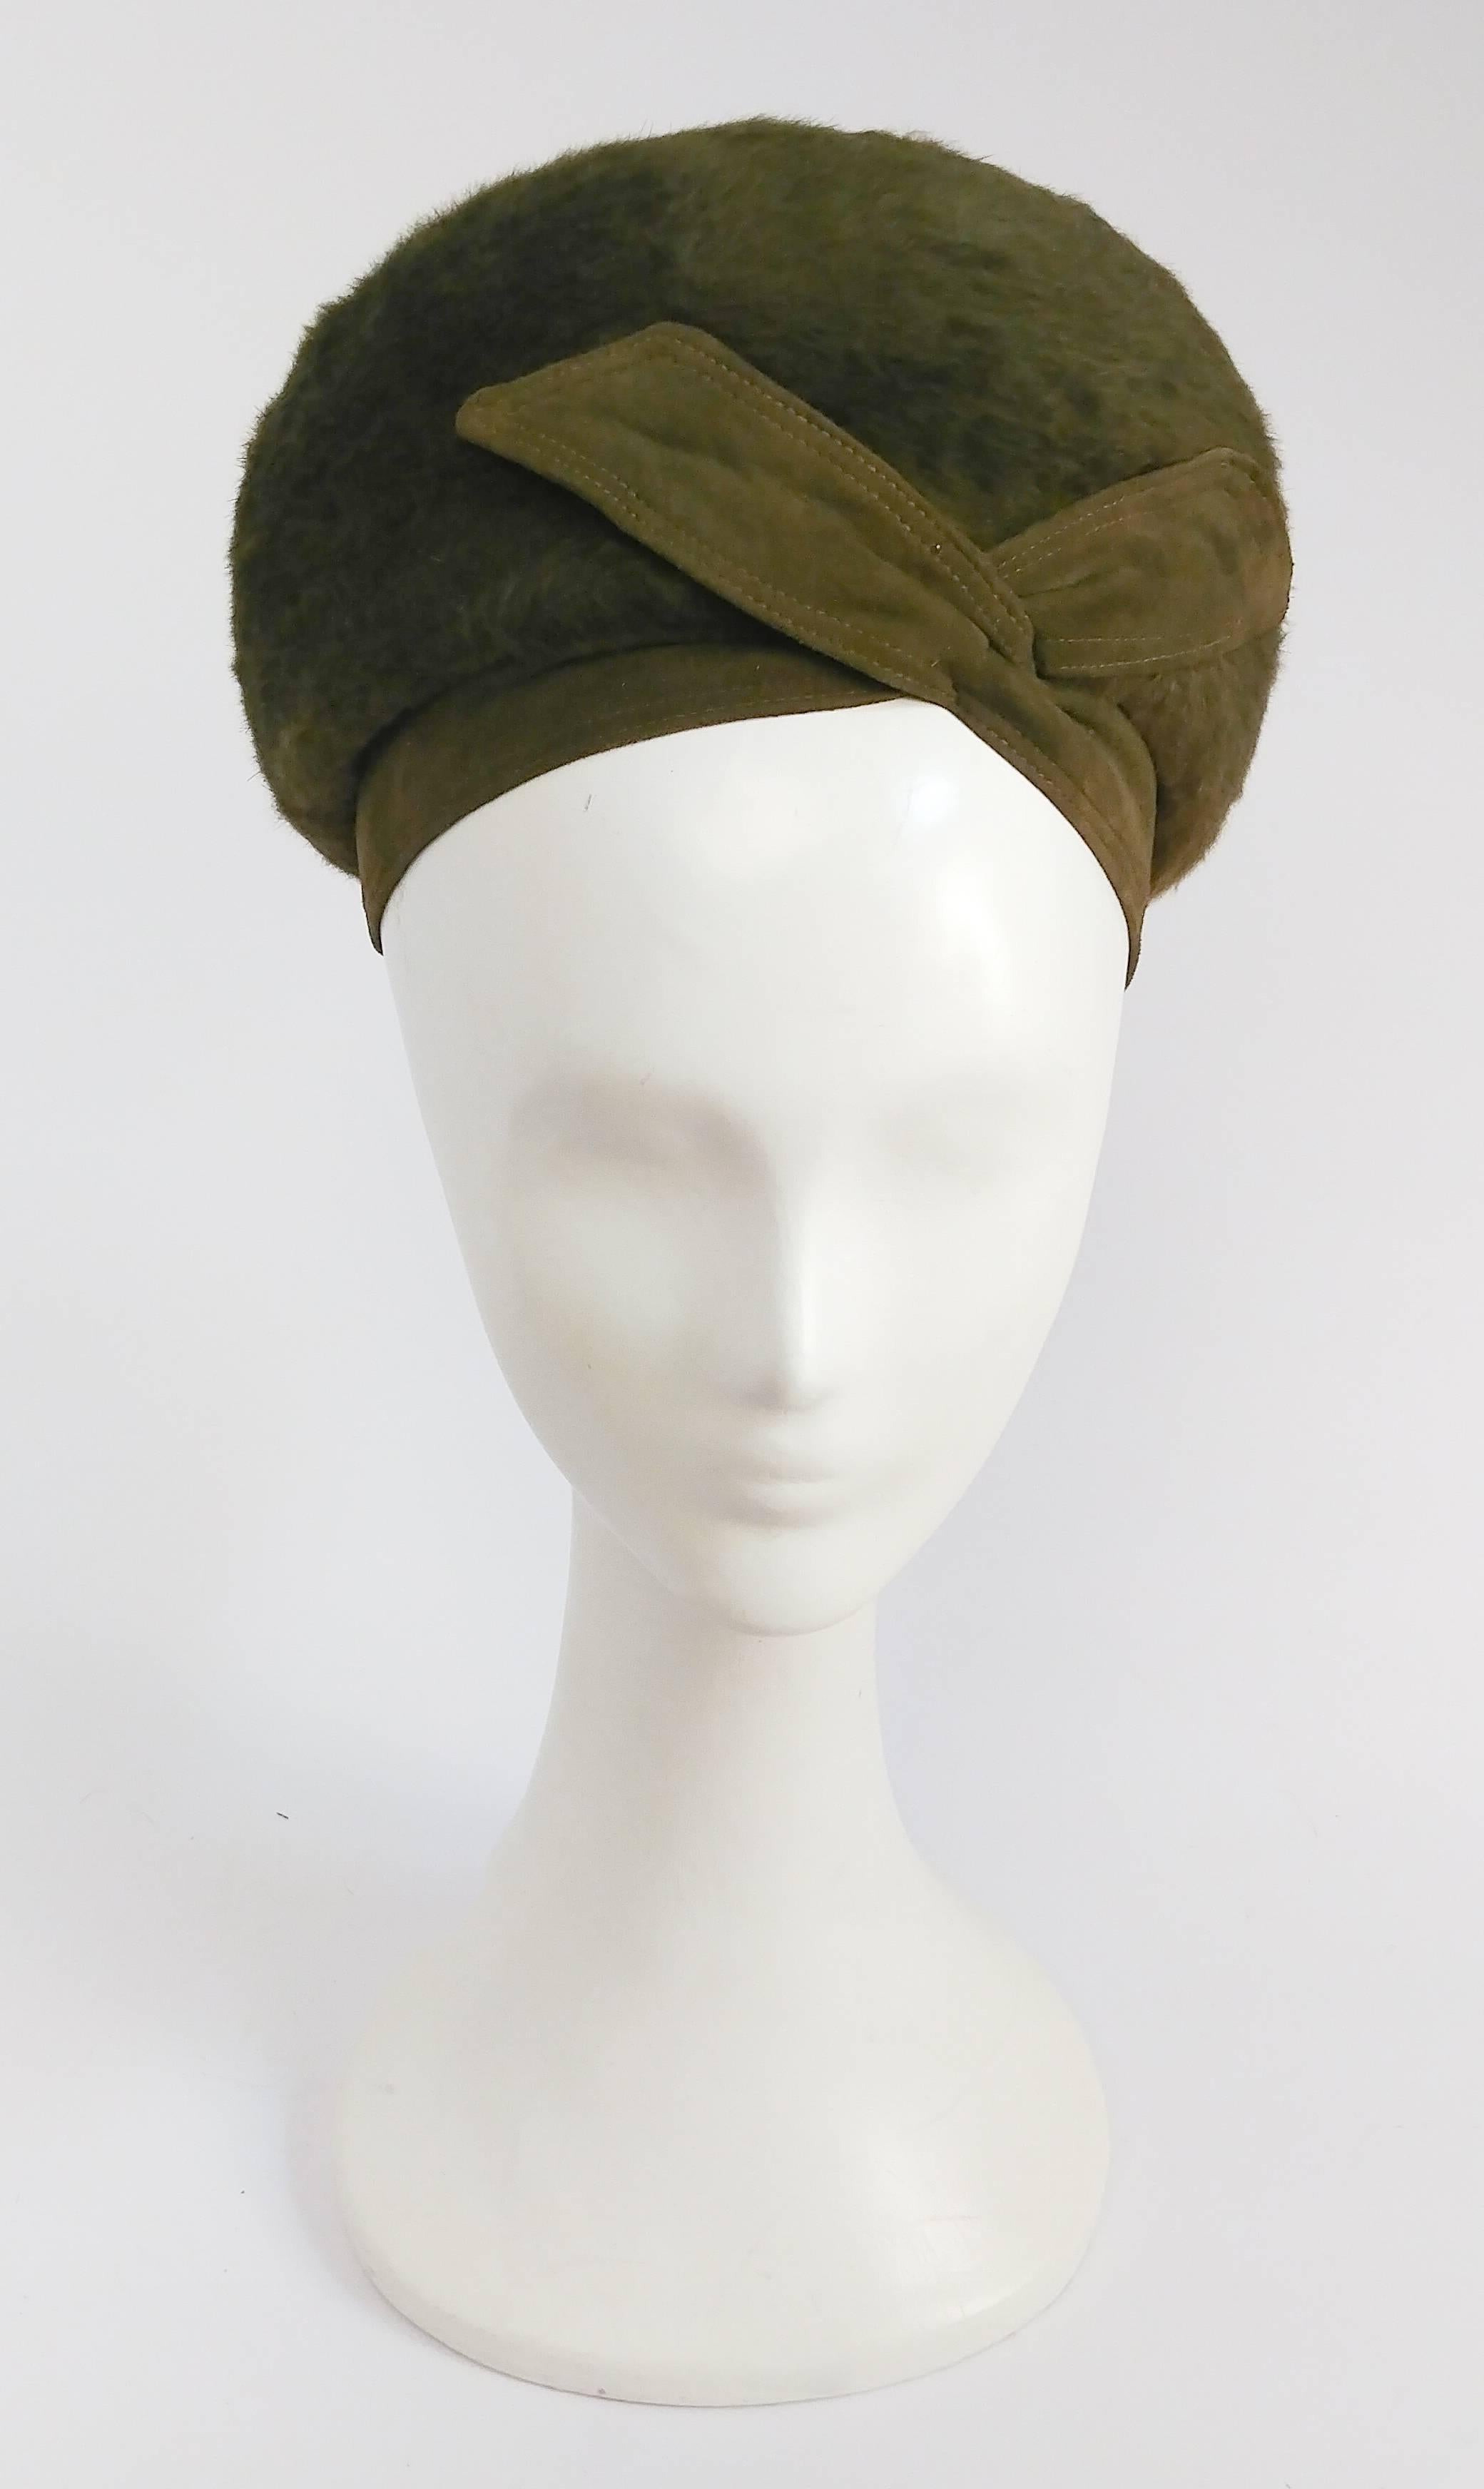 1960s Moss Green Felt Hat w/ Crossover Ribbon Detail. Fur felt.